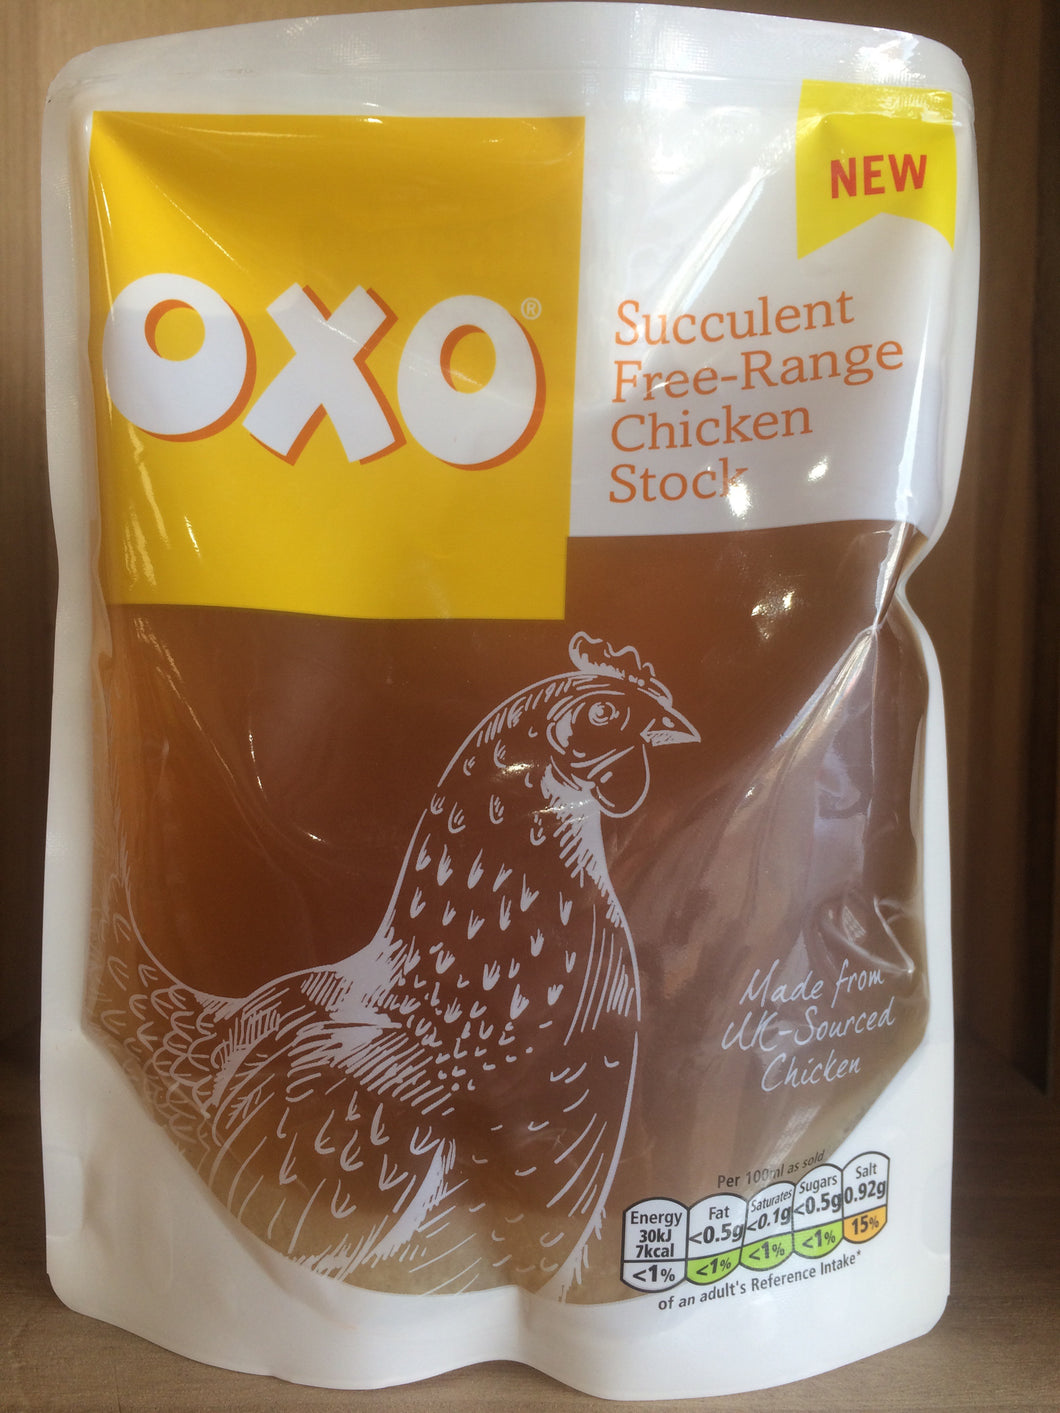 OXO Stock Pots Chicken 4 x 20g